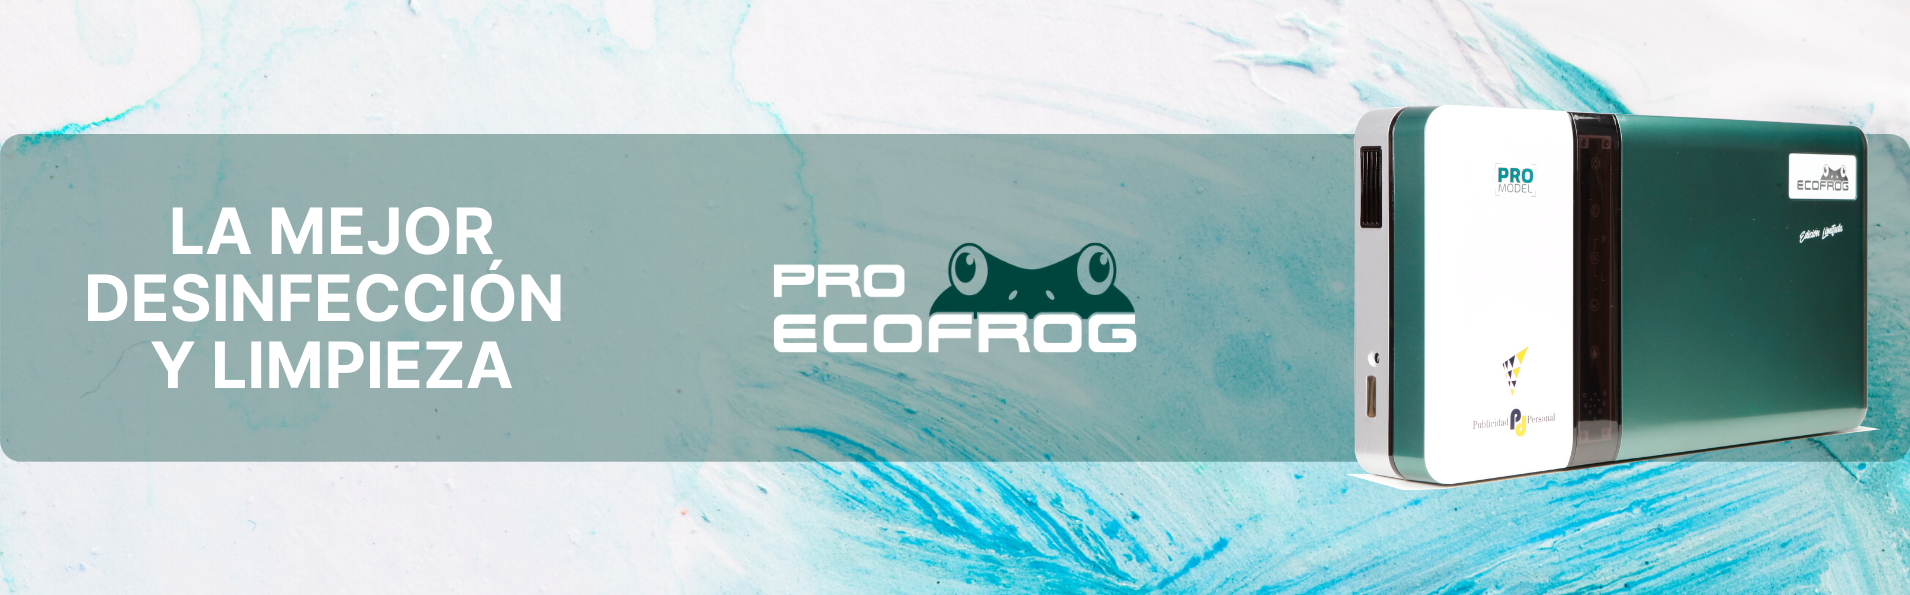 Ecofrog